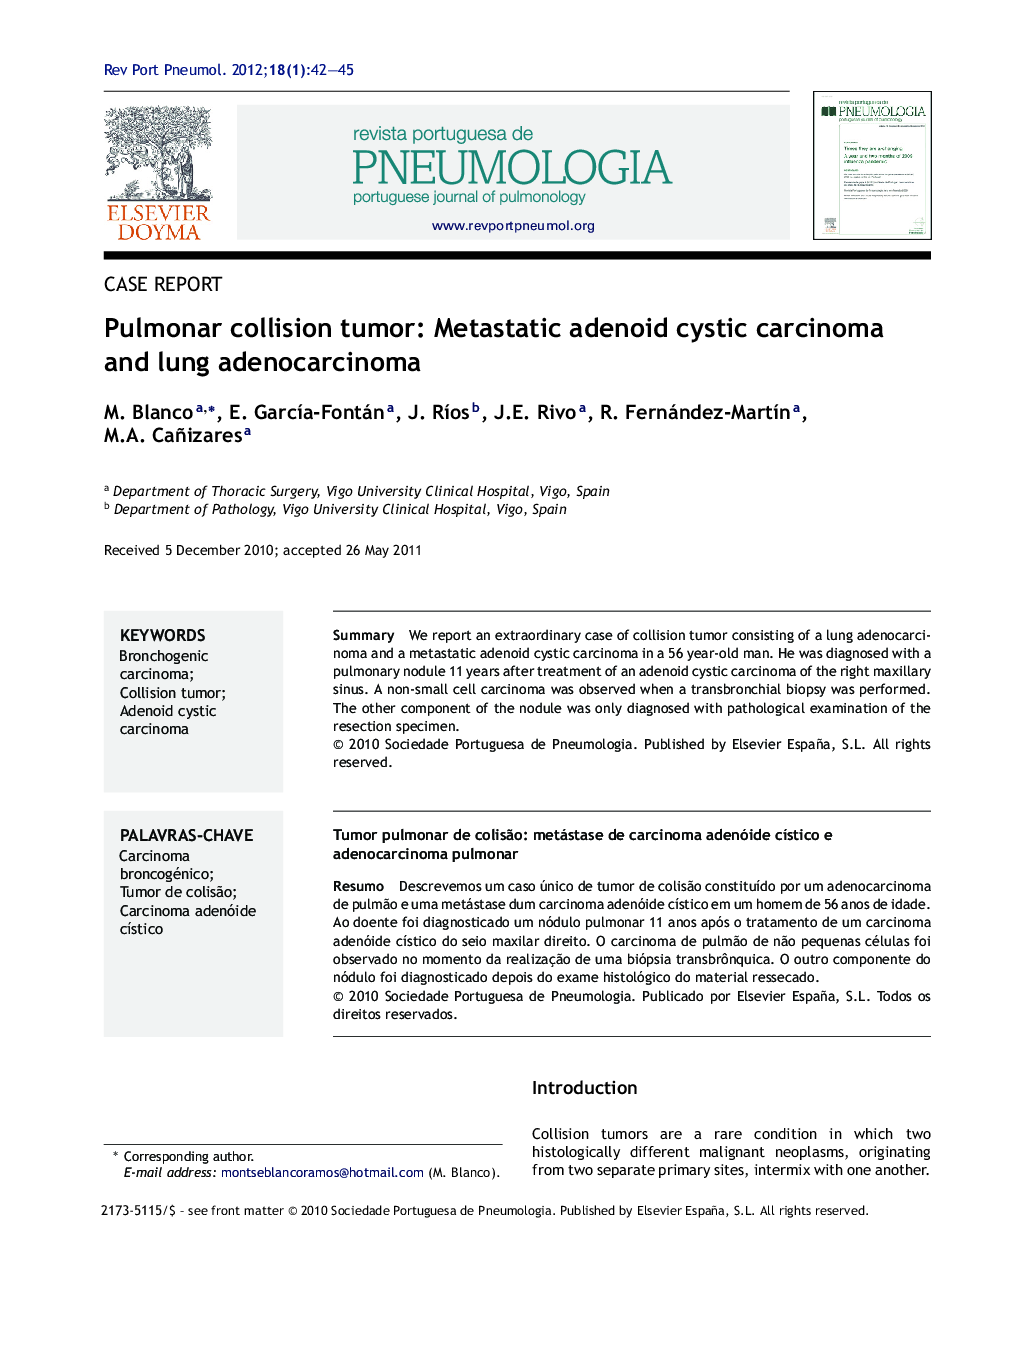 Pulmonar collision tumor: Metastatic adenoid cystic carcinoma and lung adenocarcinoma